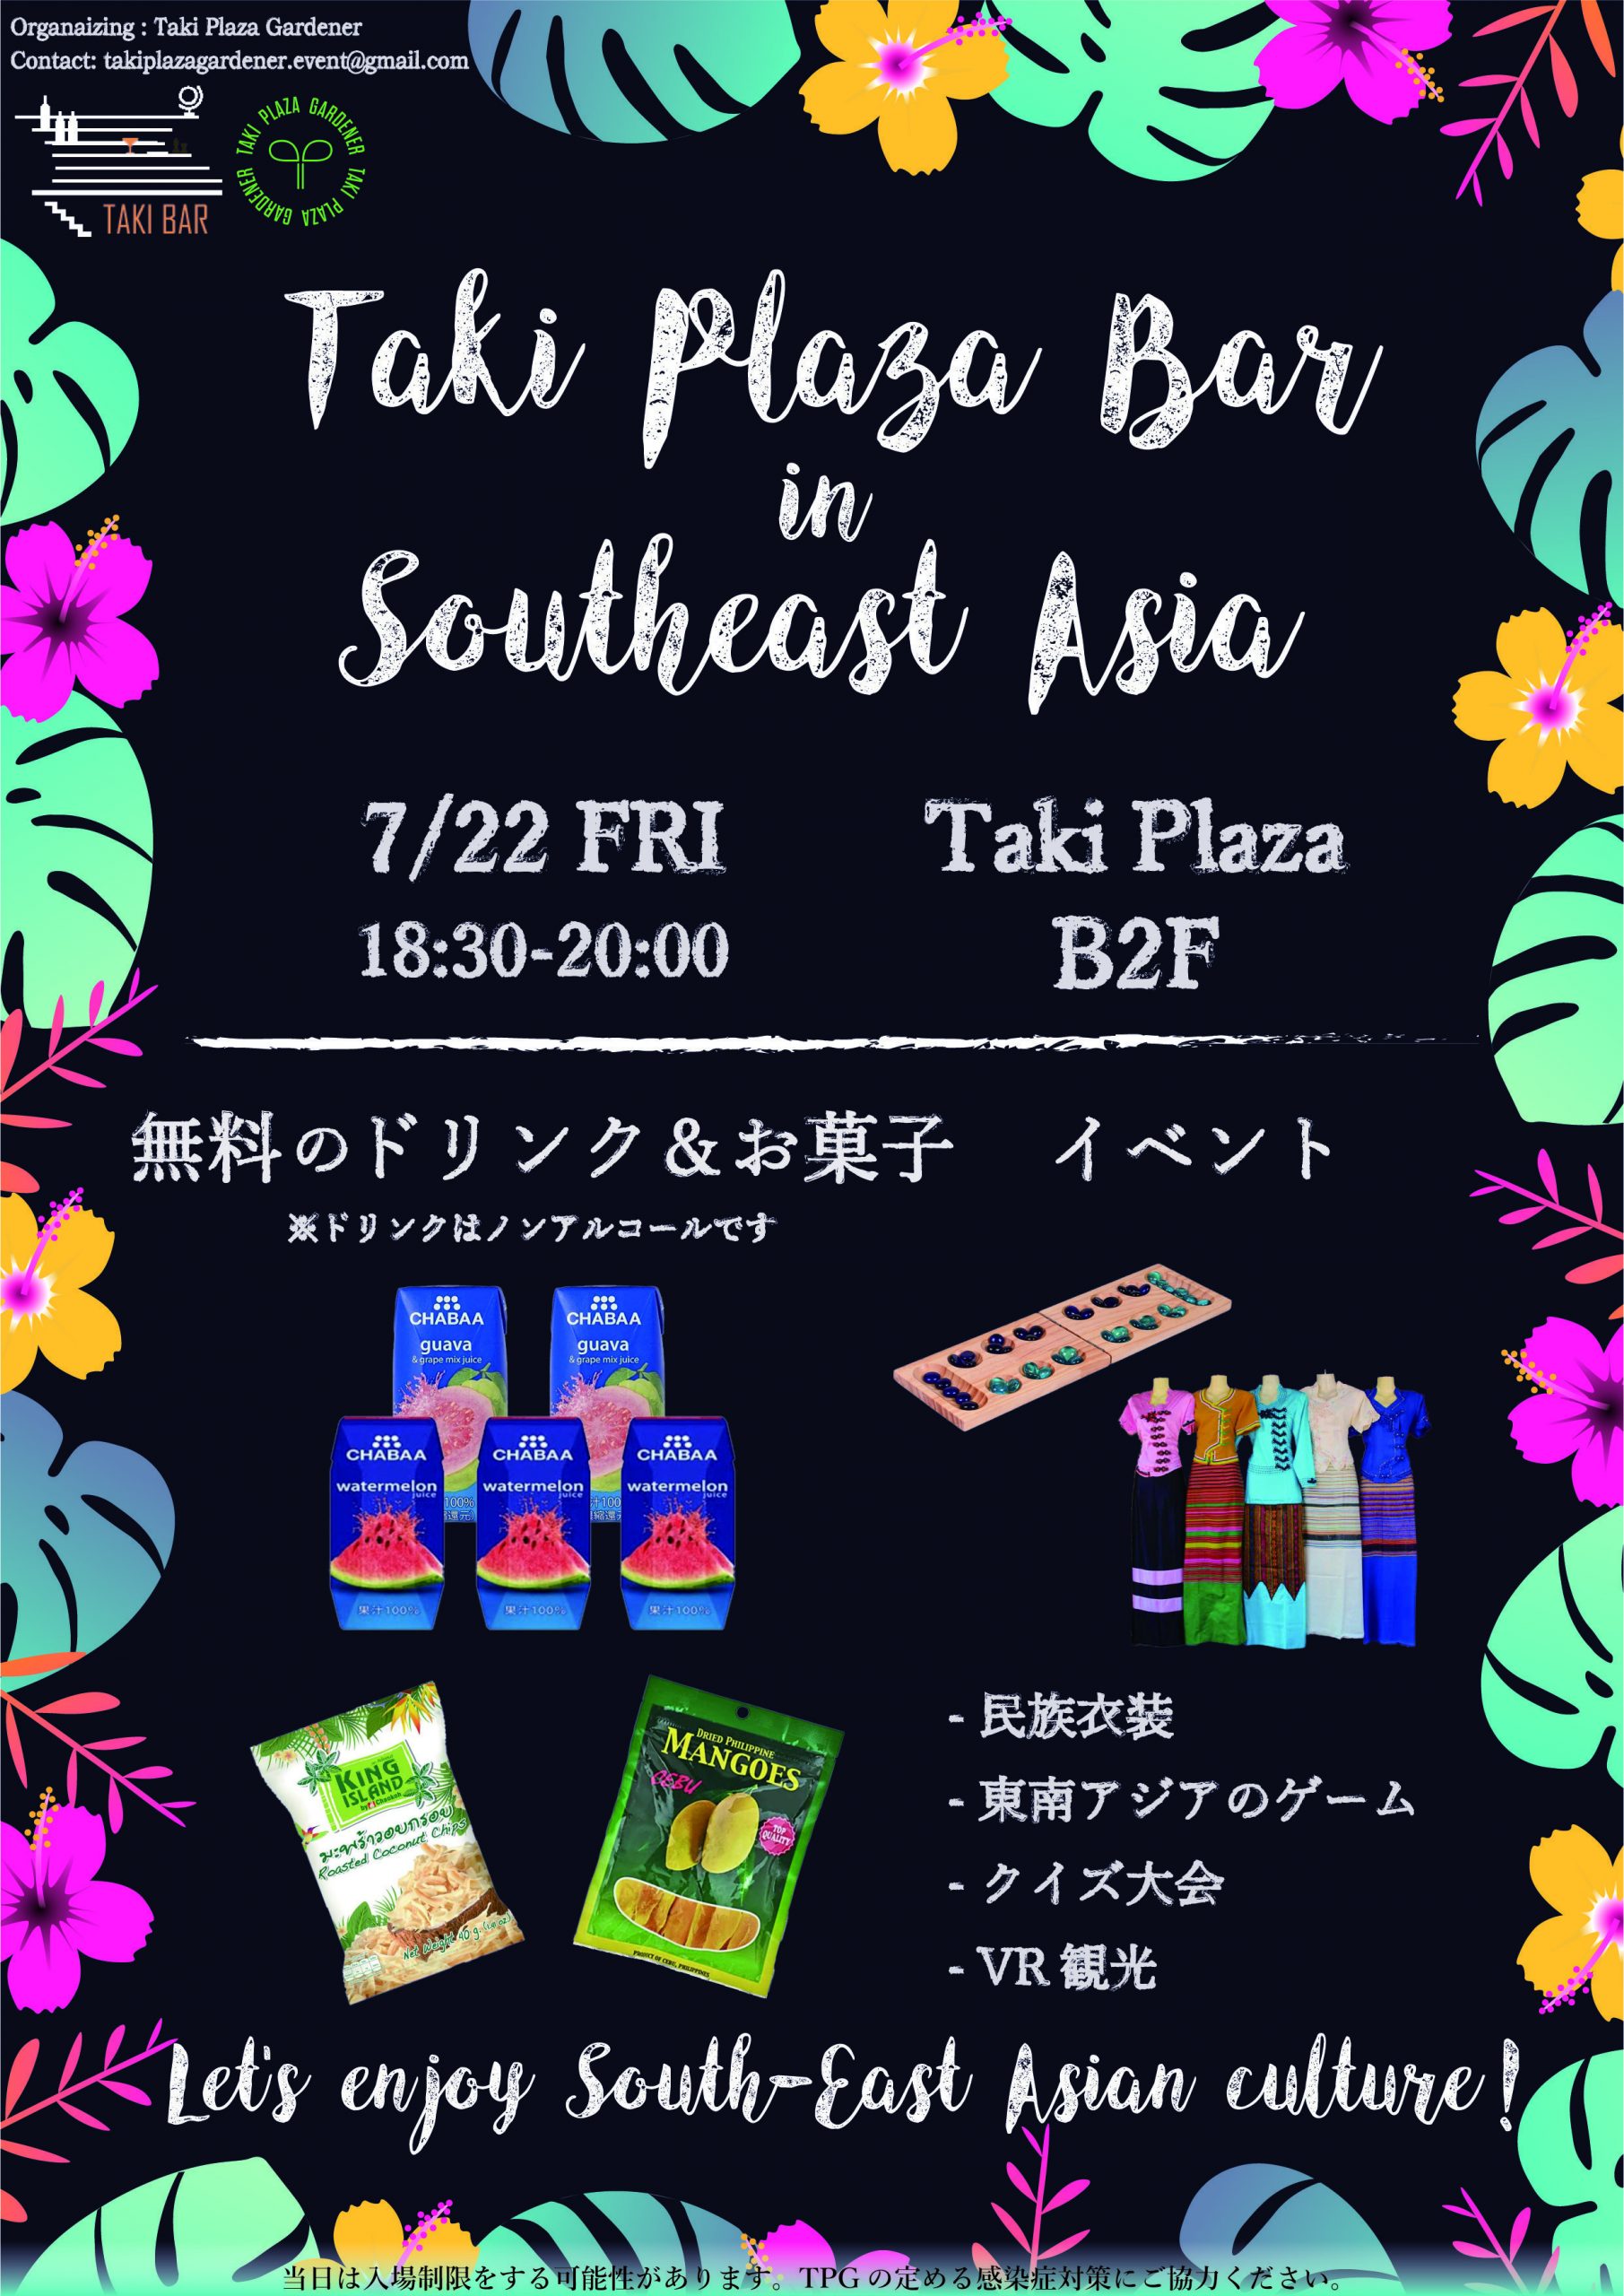 Taki Plaza Bar in Southeast Asia